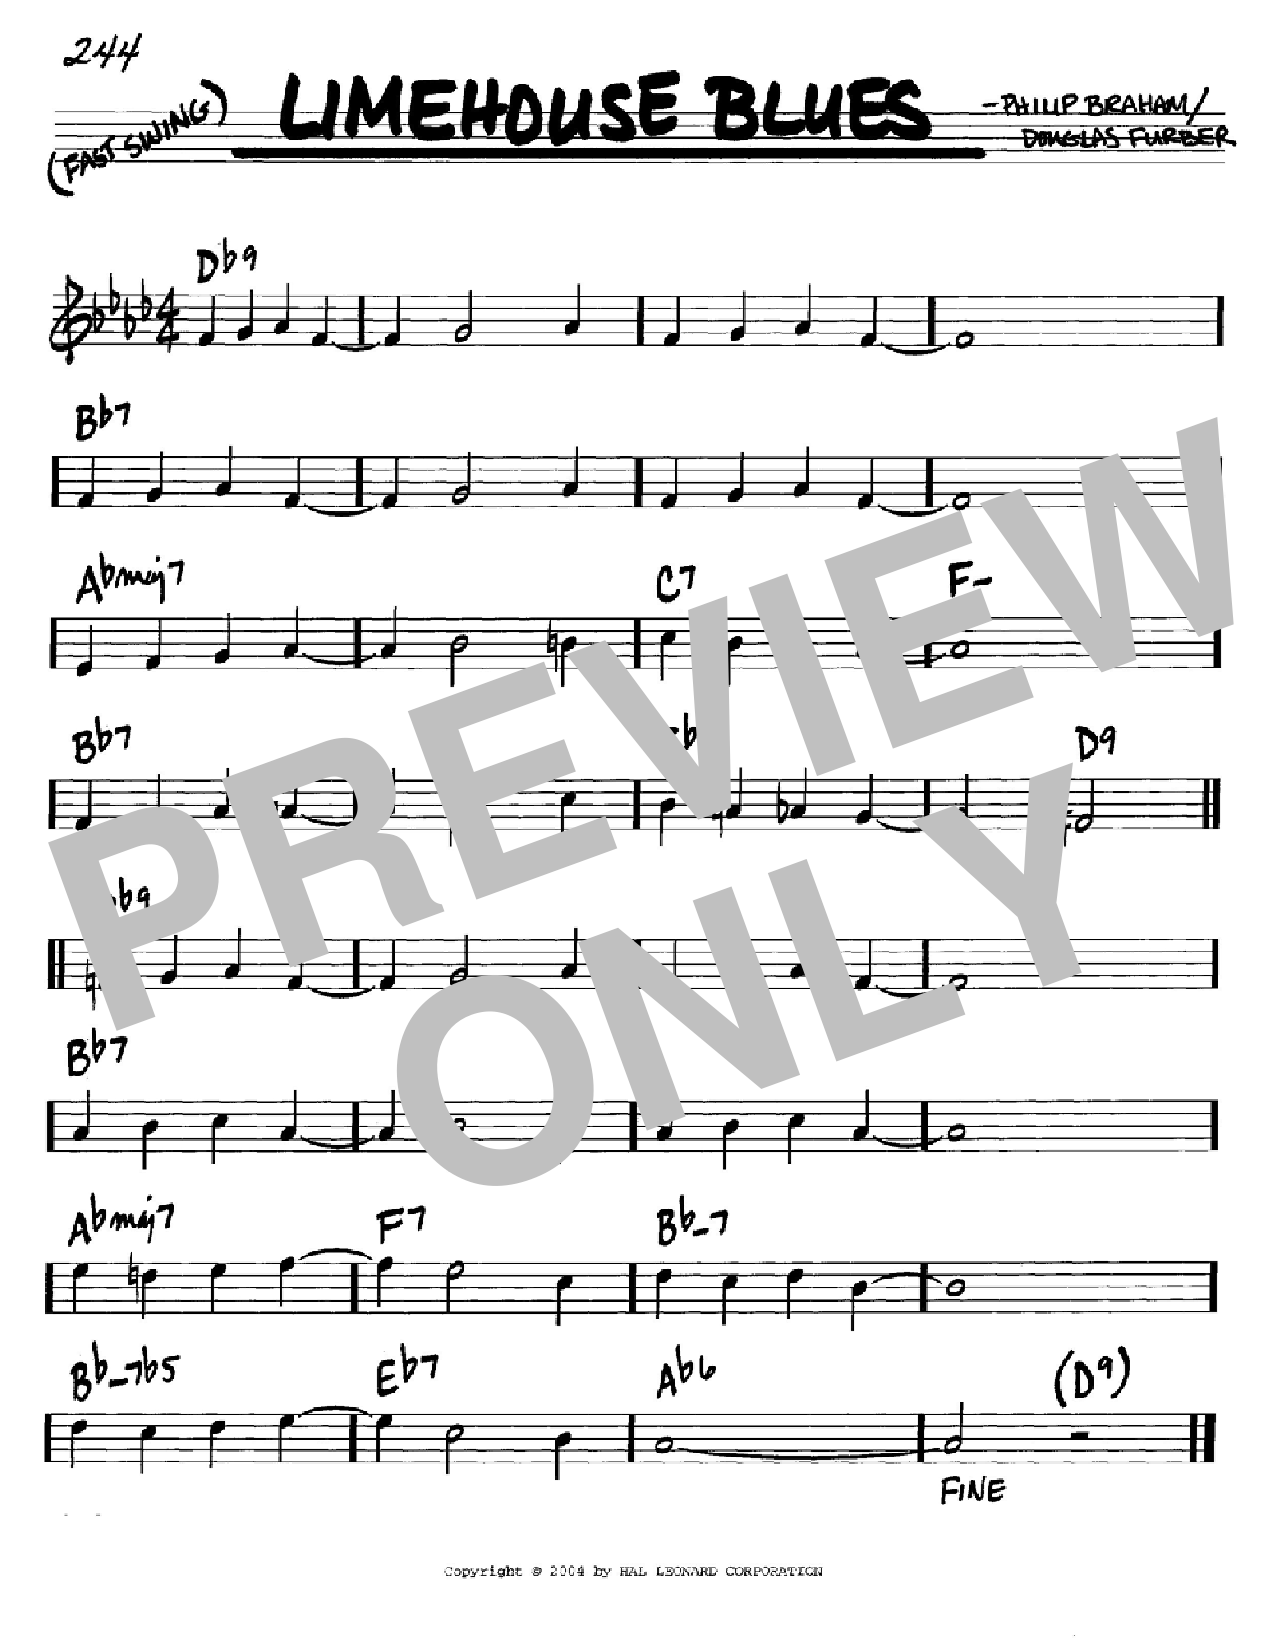 Douglas Furber Limehouse Blues Sheet Music Notes & Chords for Melody Line, Lyrics & Chords - Download or Print PDF